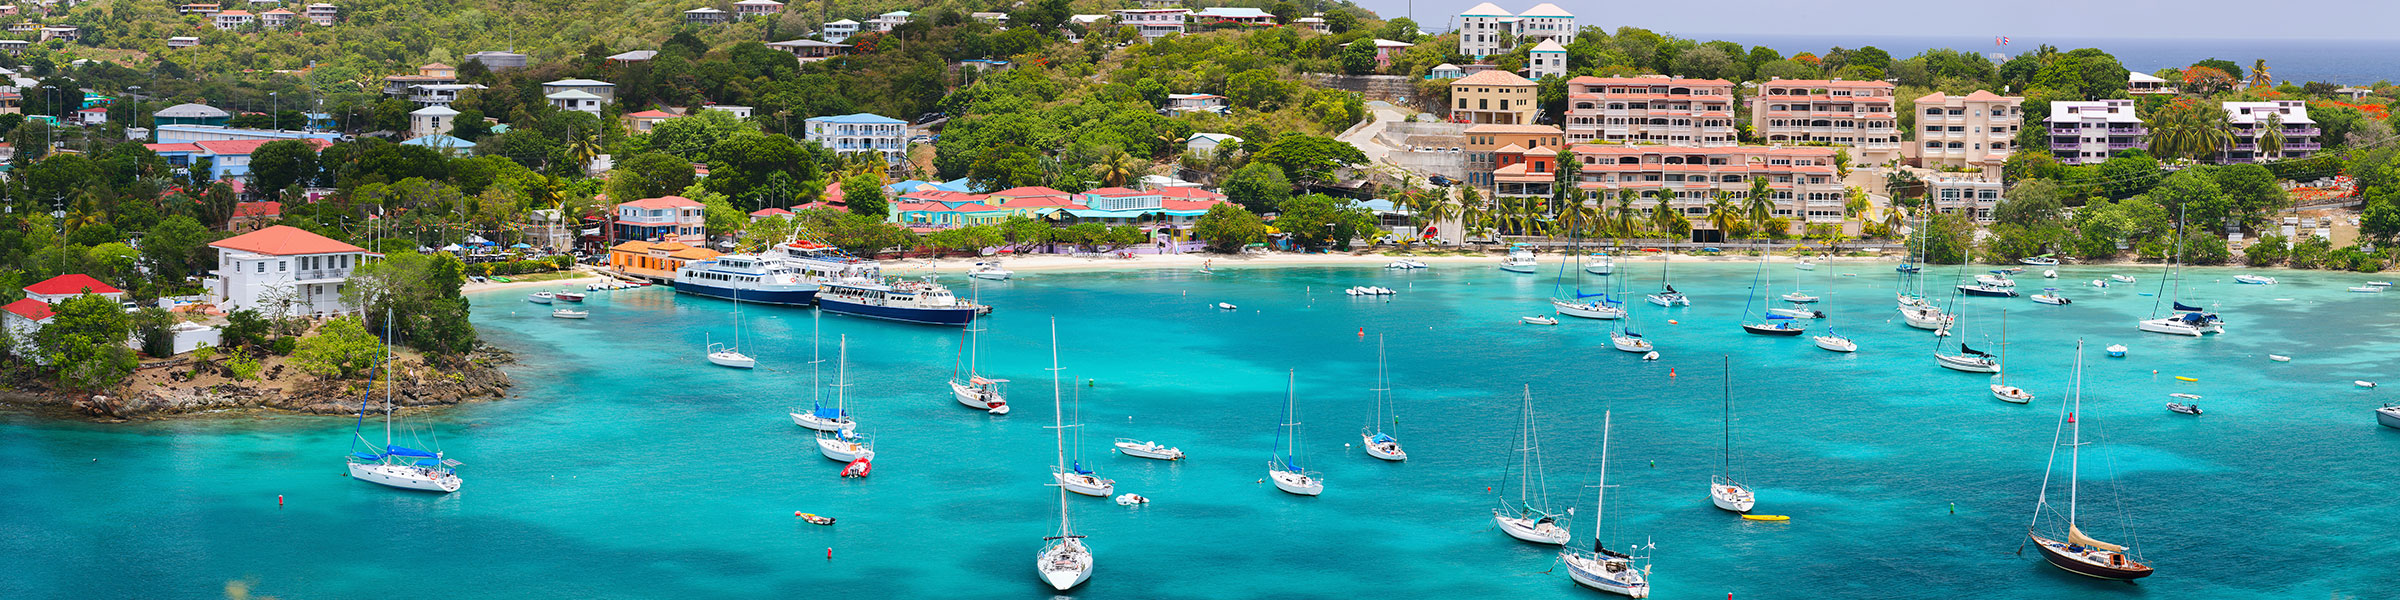 Panorama of Cruz Bay the main town on the island of St. John USVI, Caribbean